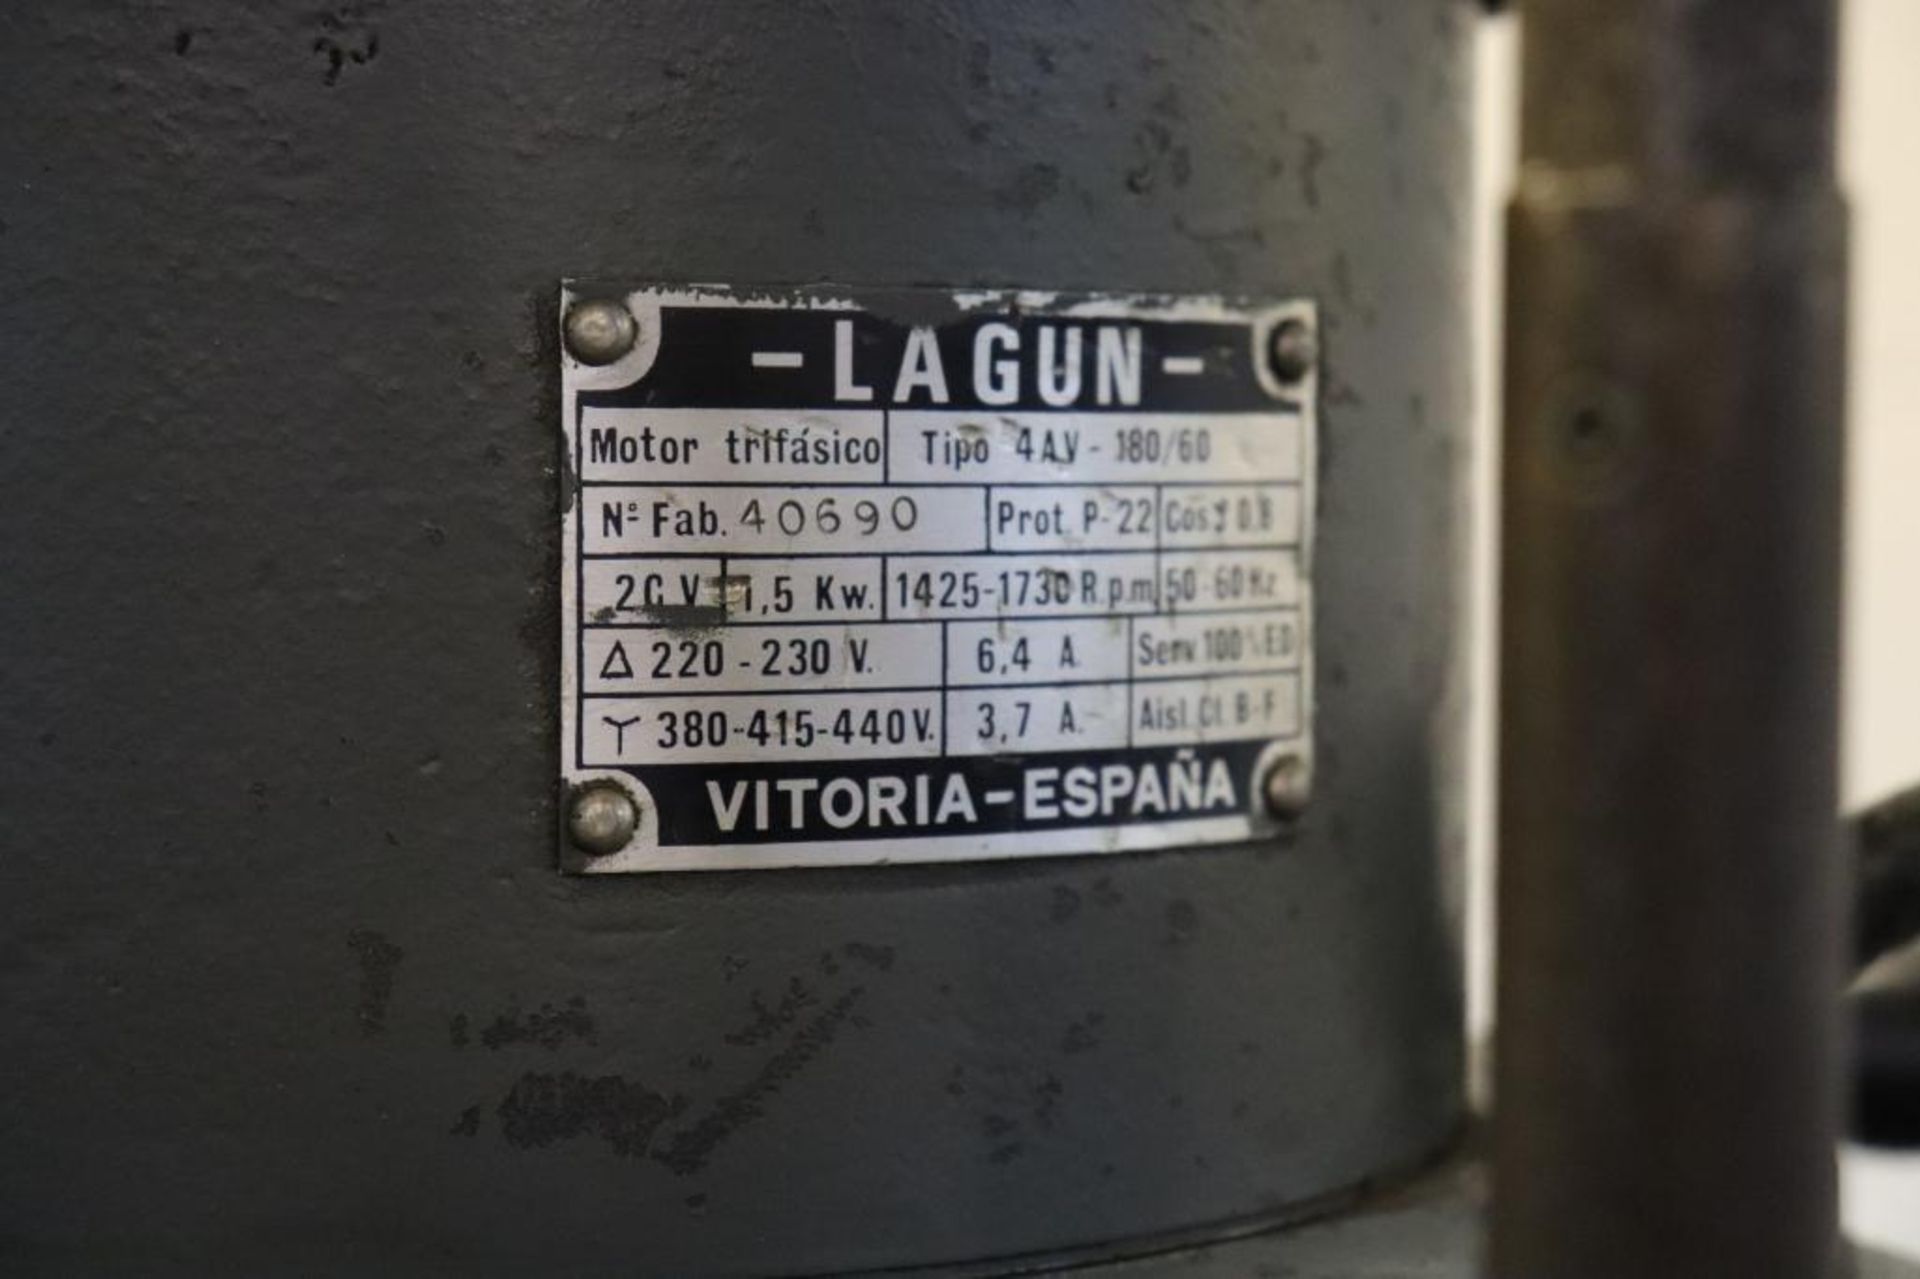 Lagun FT 1 vertical milling machine - Image 13 of 22